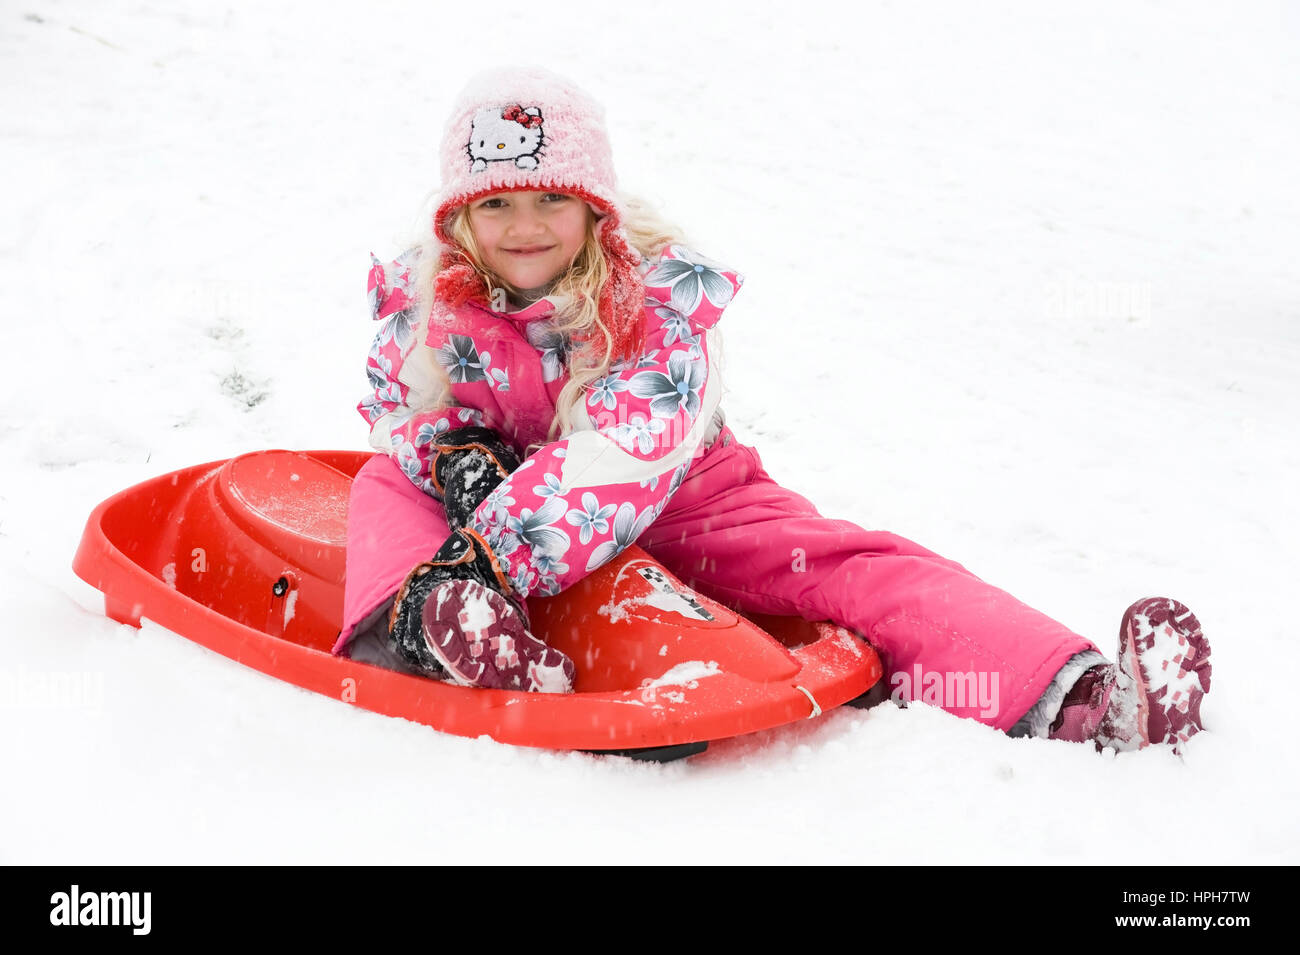 Maedchen mit Bob im Schnee - girl with bob in snow, Model released Stock Photo